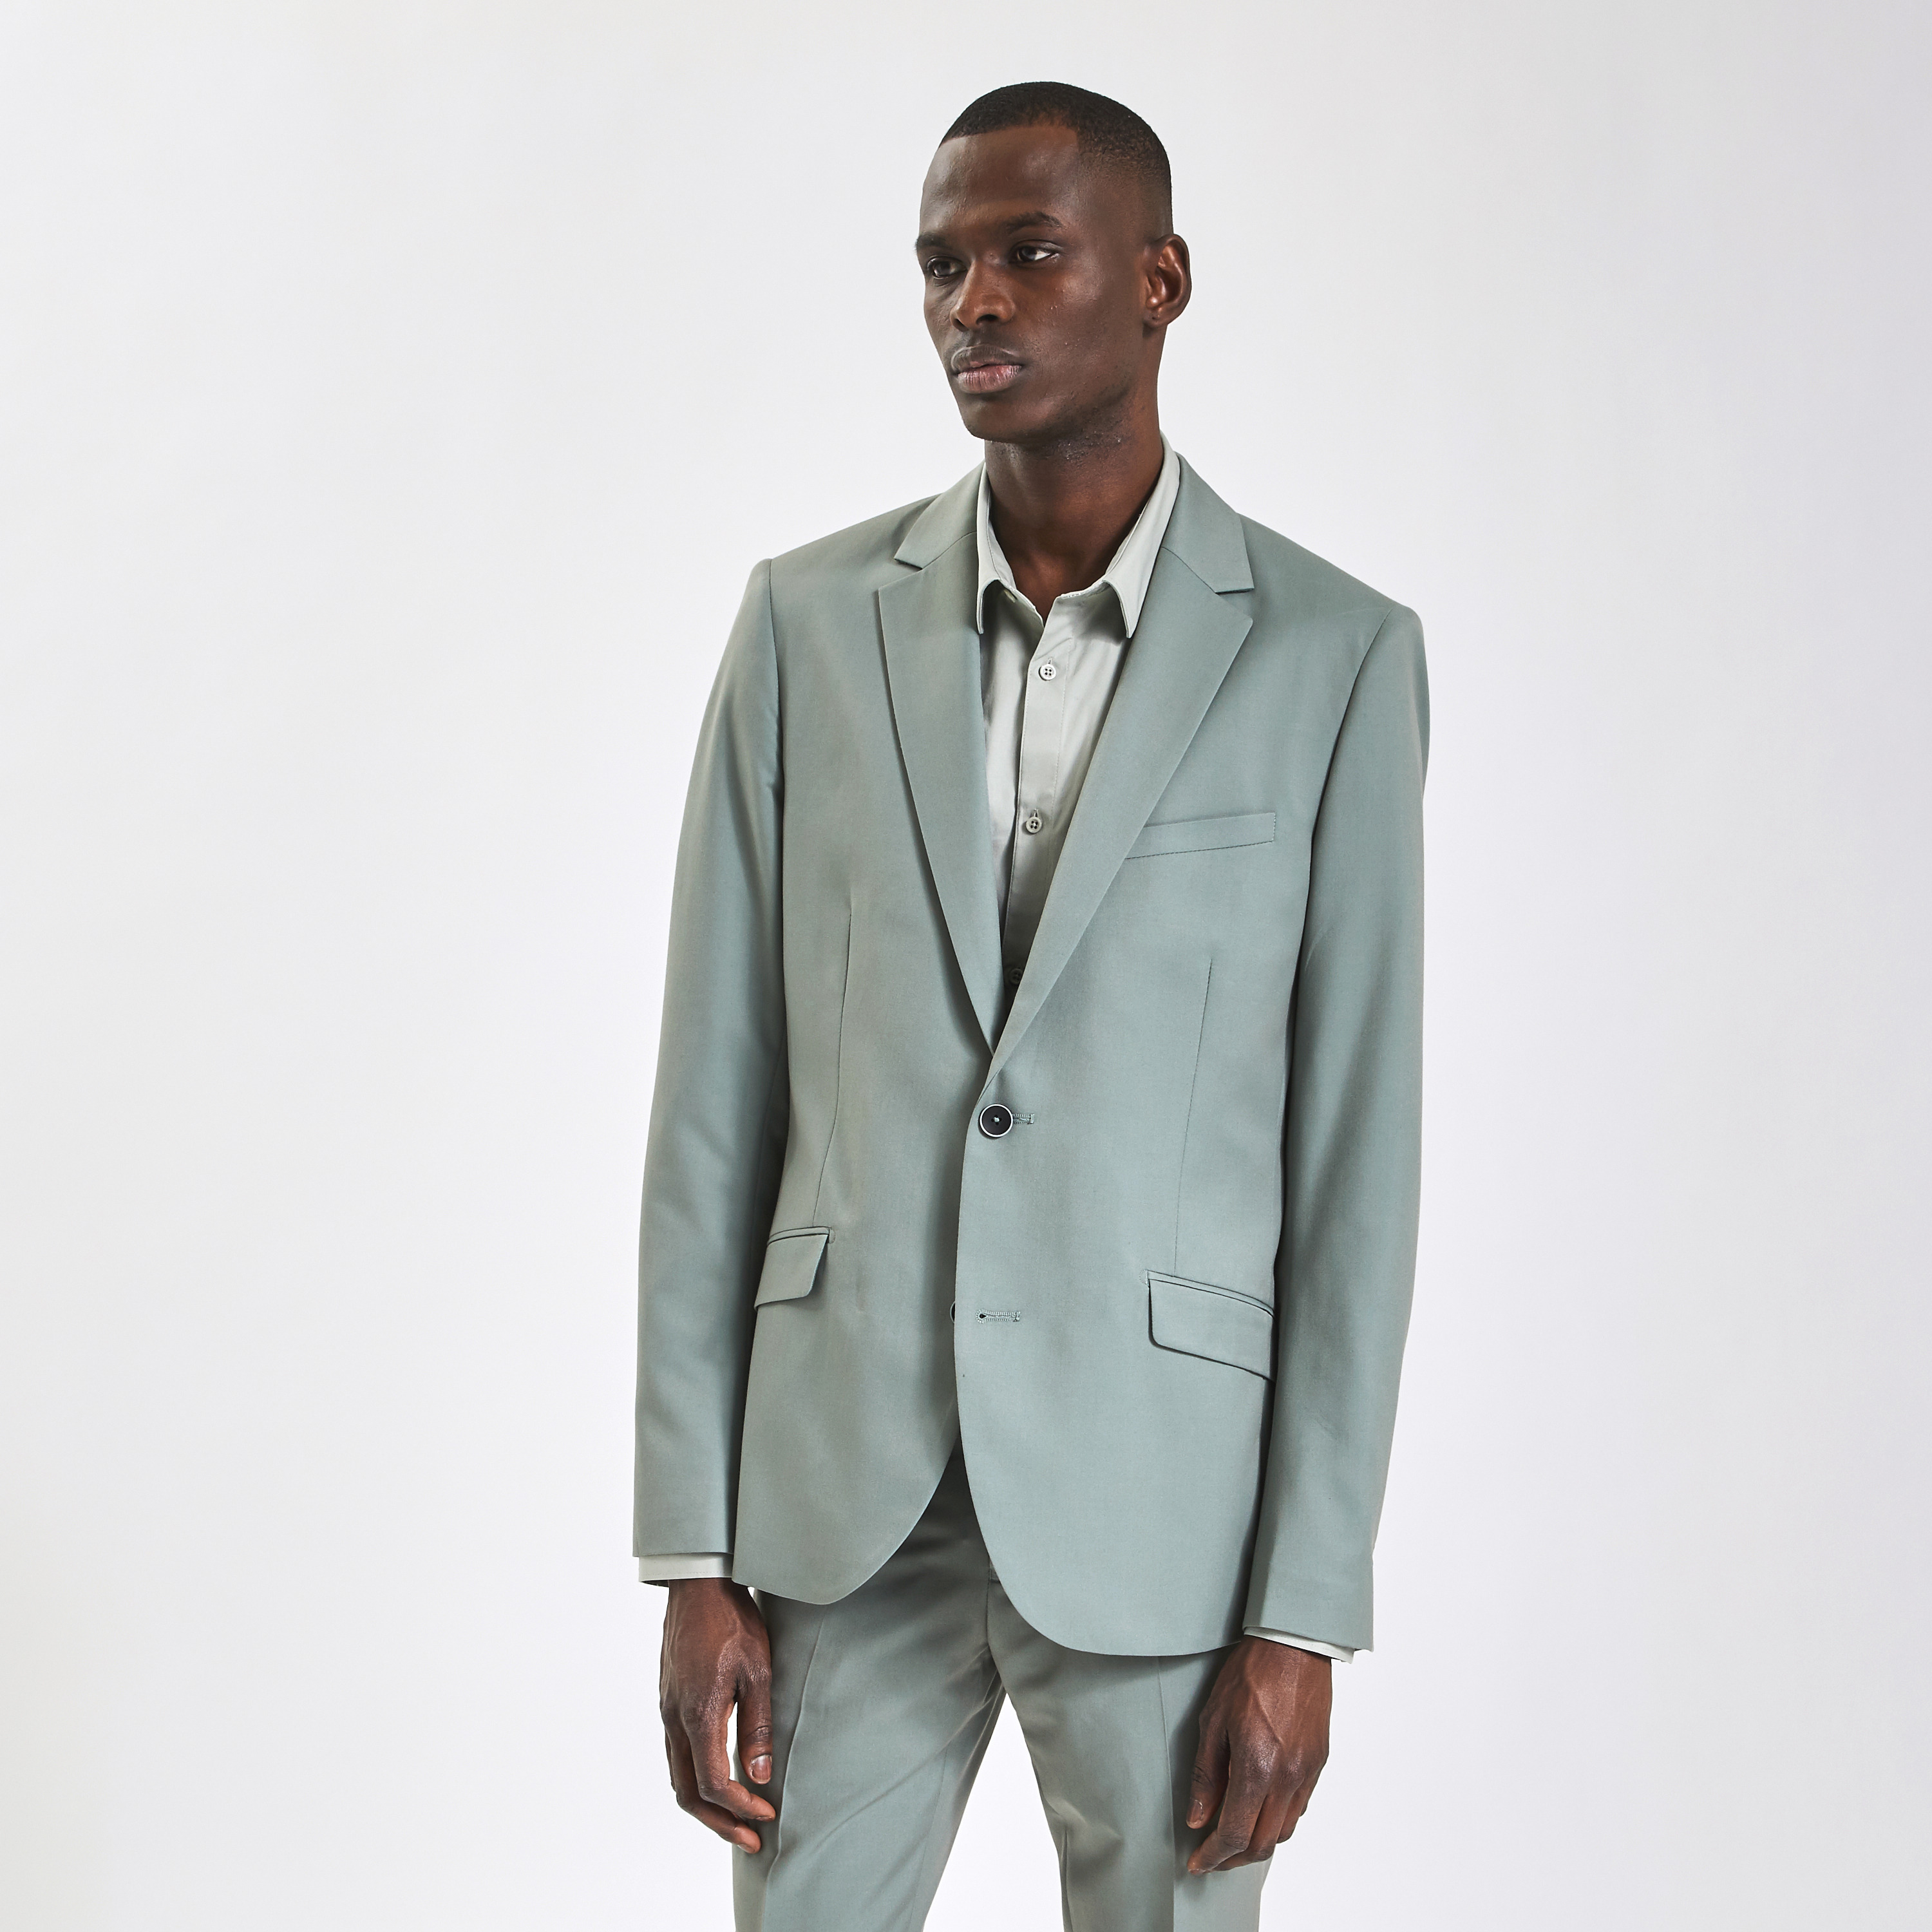 Veste de costume slim Vert clair 54 100% Polyester, 85% Polyester, 15% Viscose Homme Jules